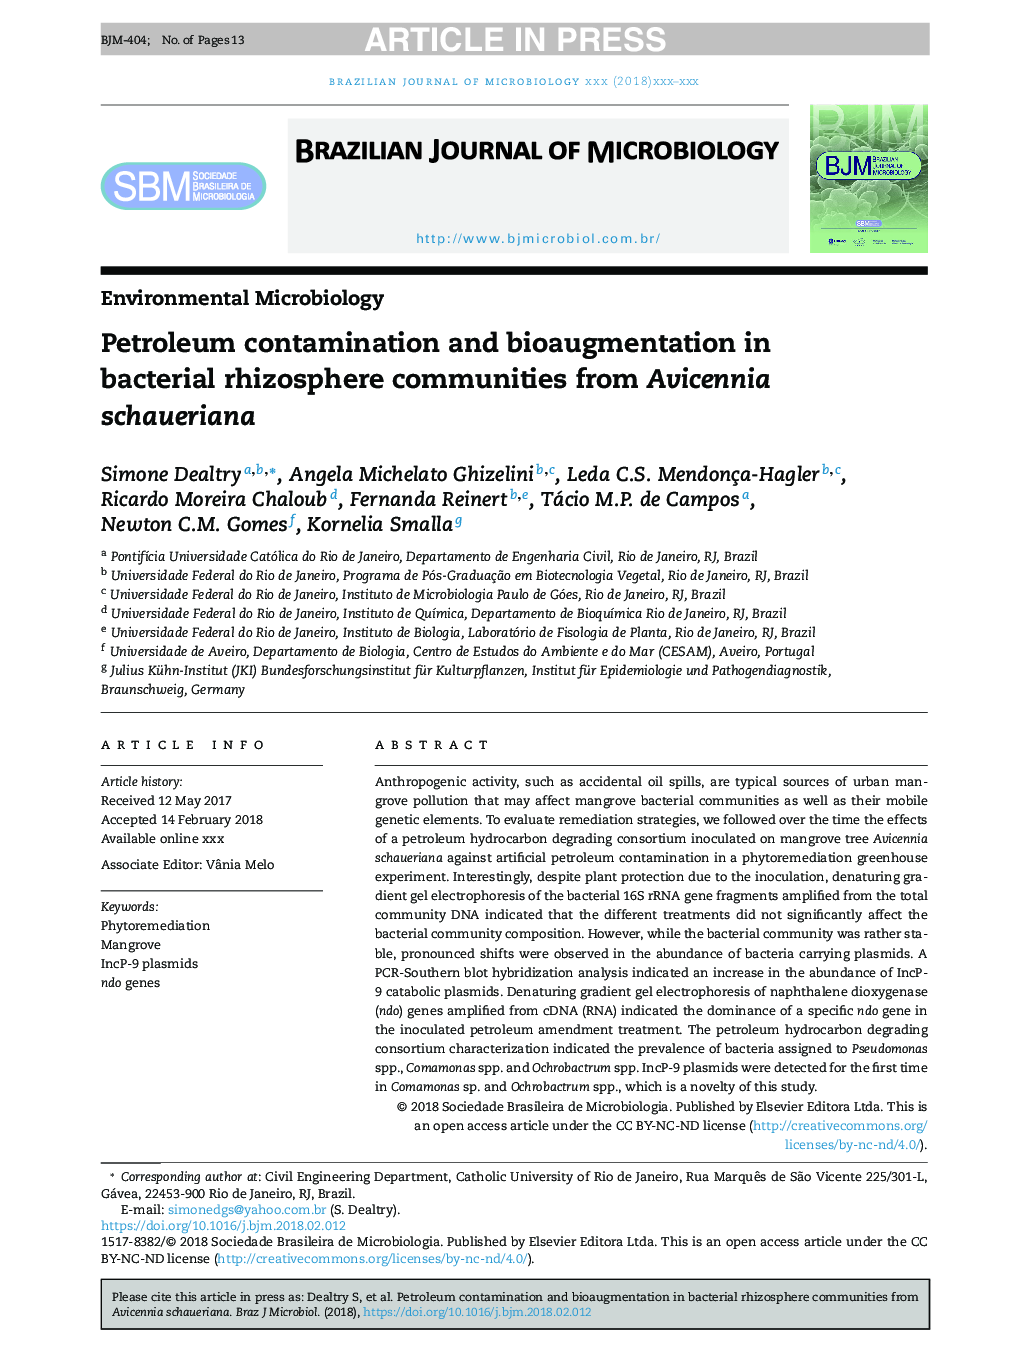 Petroleum contamination and bioaugmentation in bacterial rhizosphere communities from Avicennia schaueriana